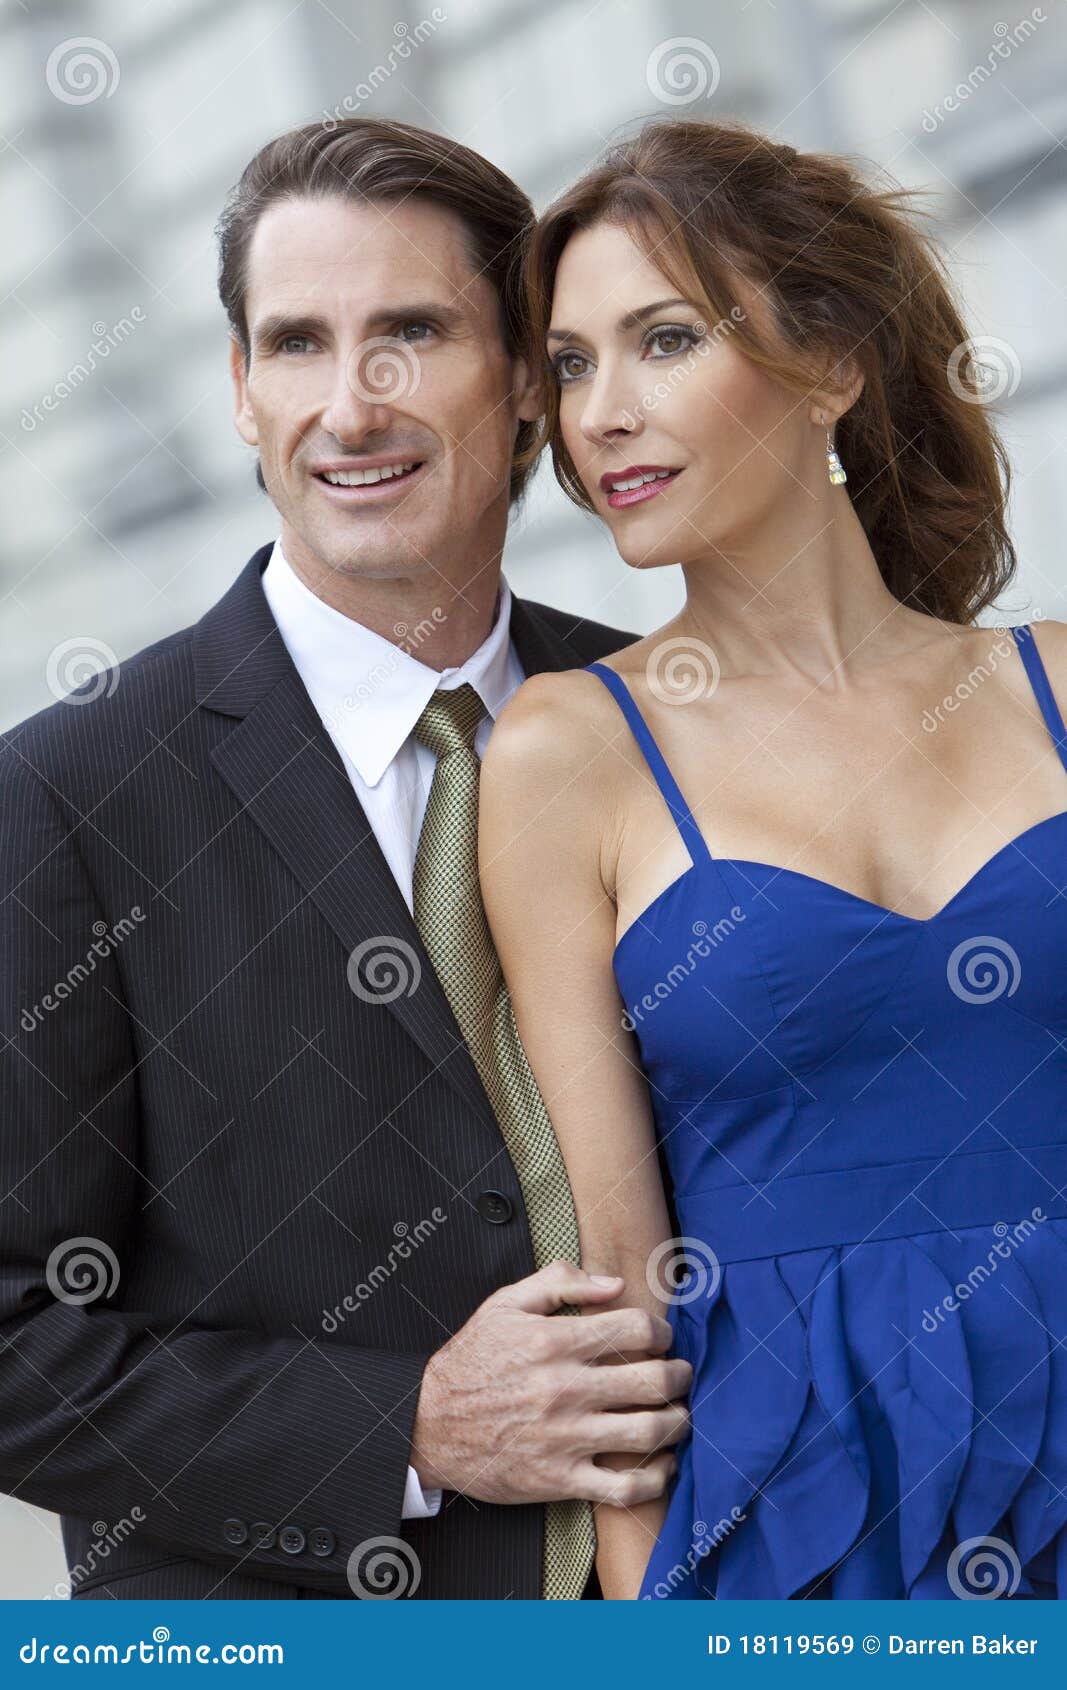 http://thumbs.dreamstime.com/z/smart-successful-man-woman-couple-18119569.jpg